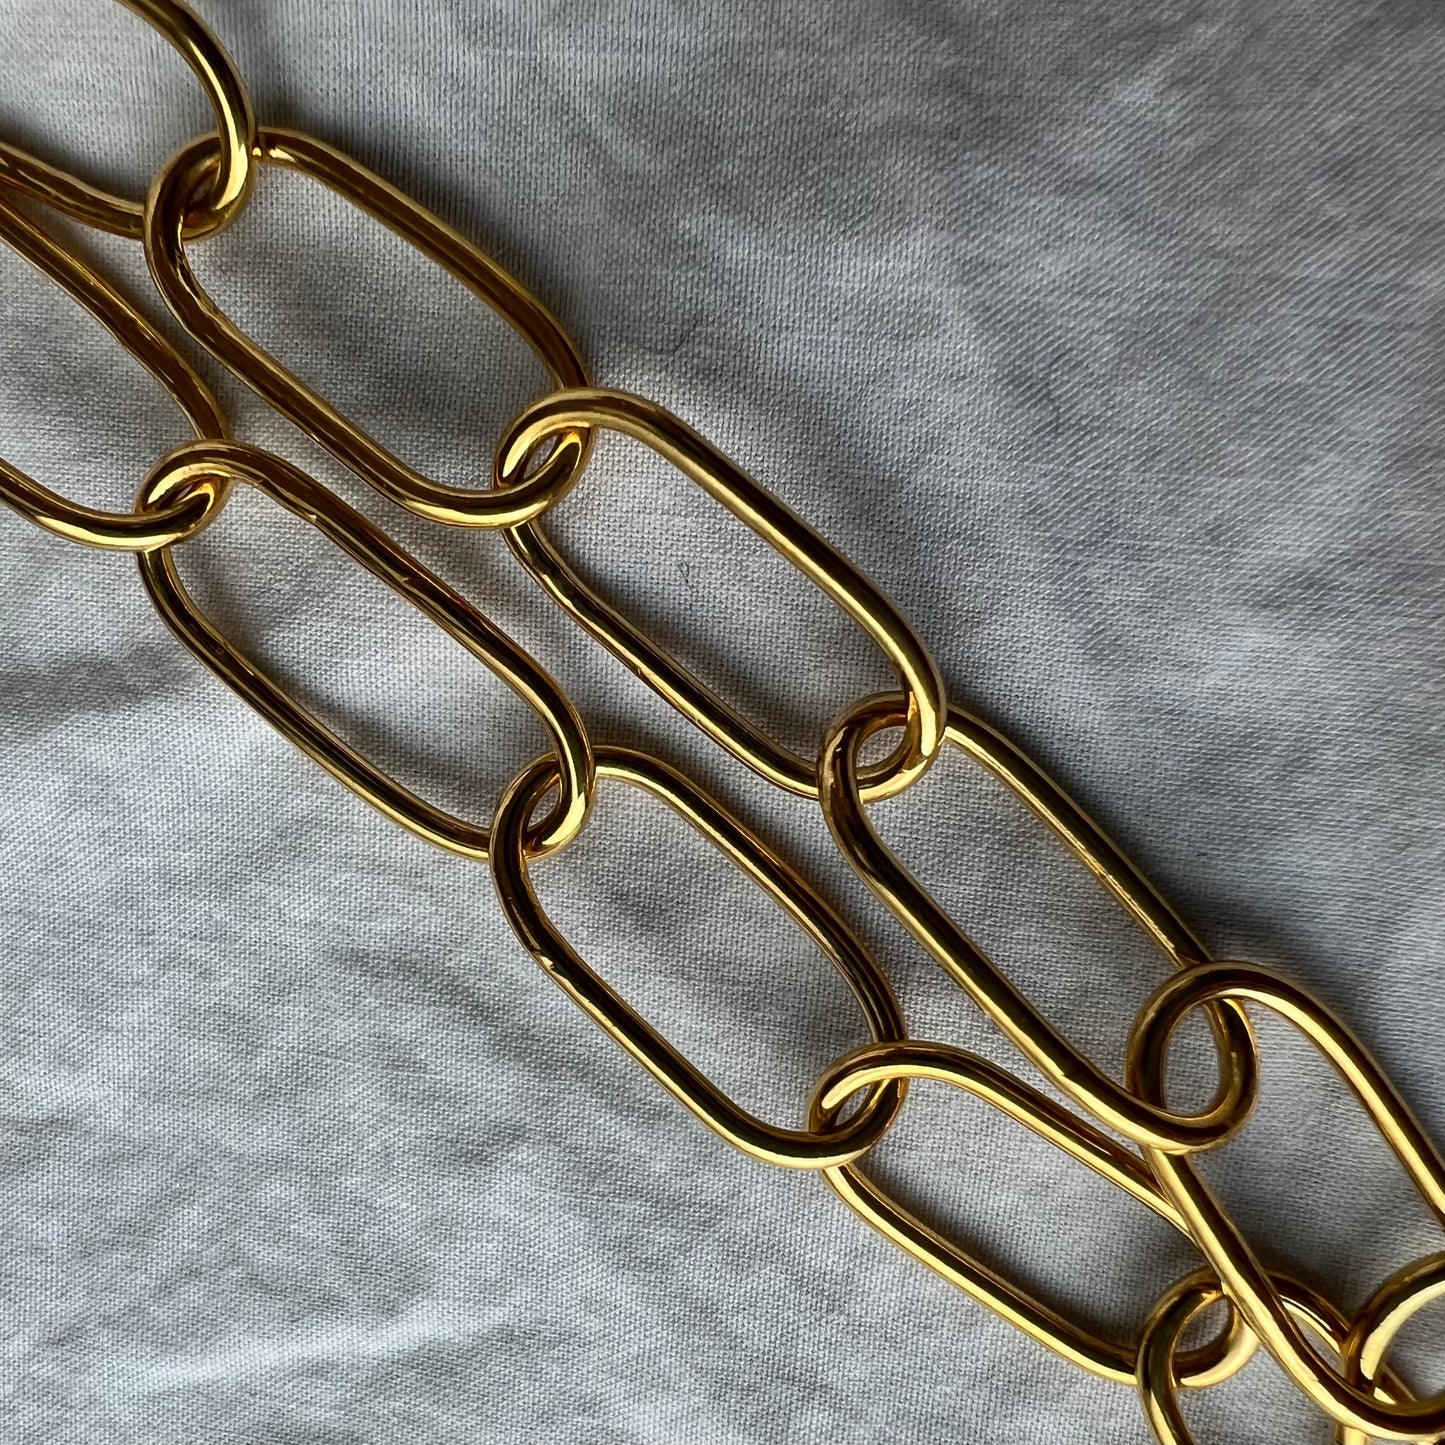 A handmade gold vermeil oval chain link bracelet.